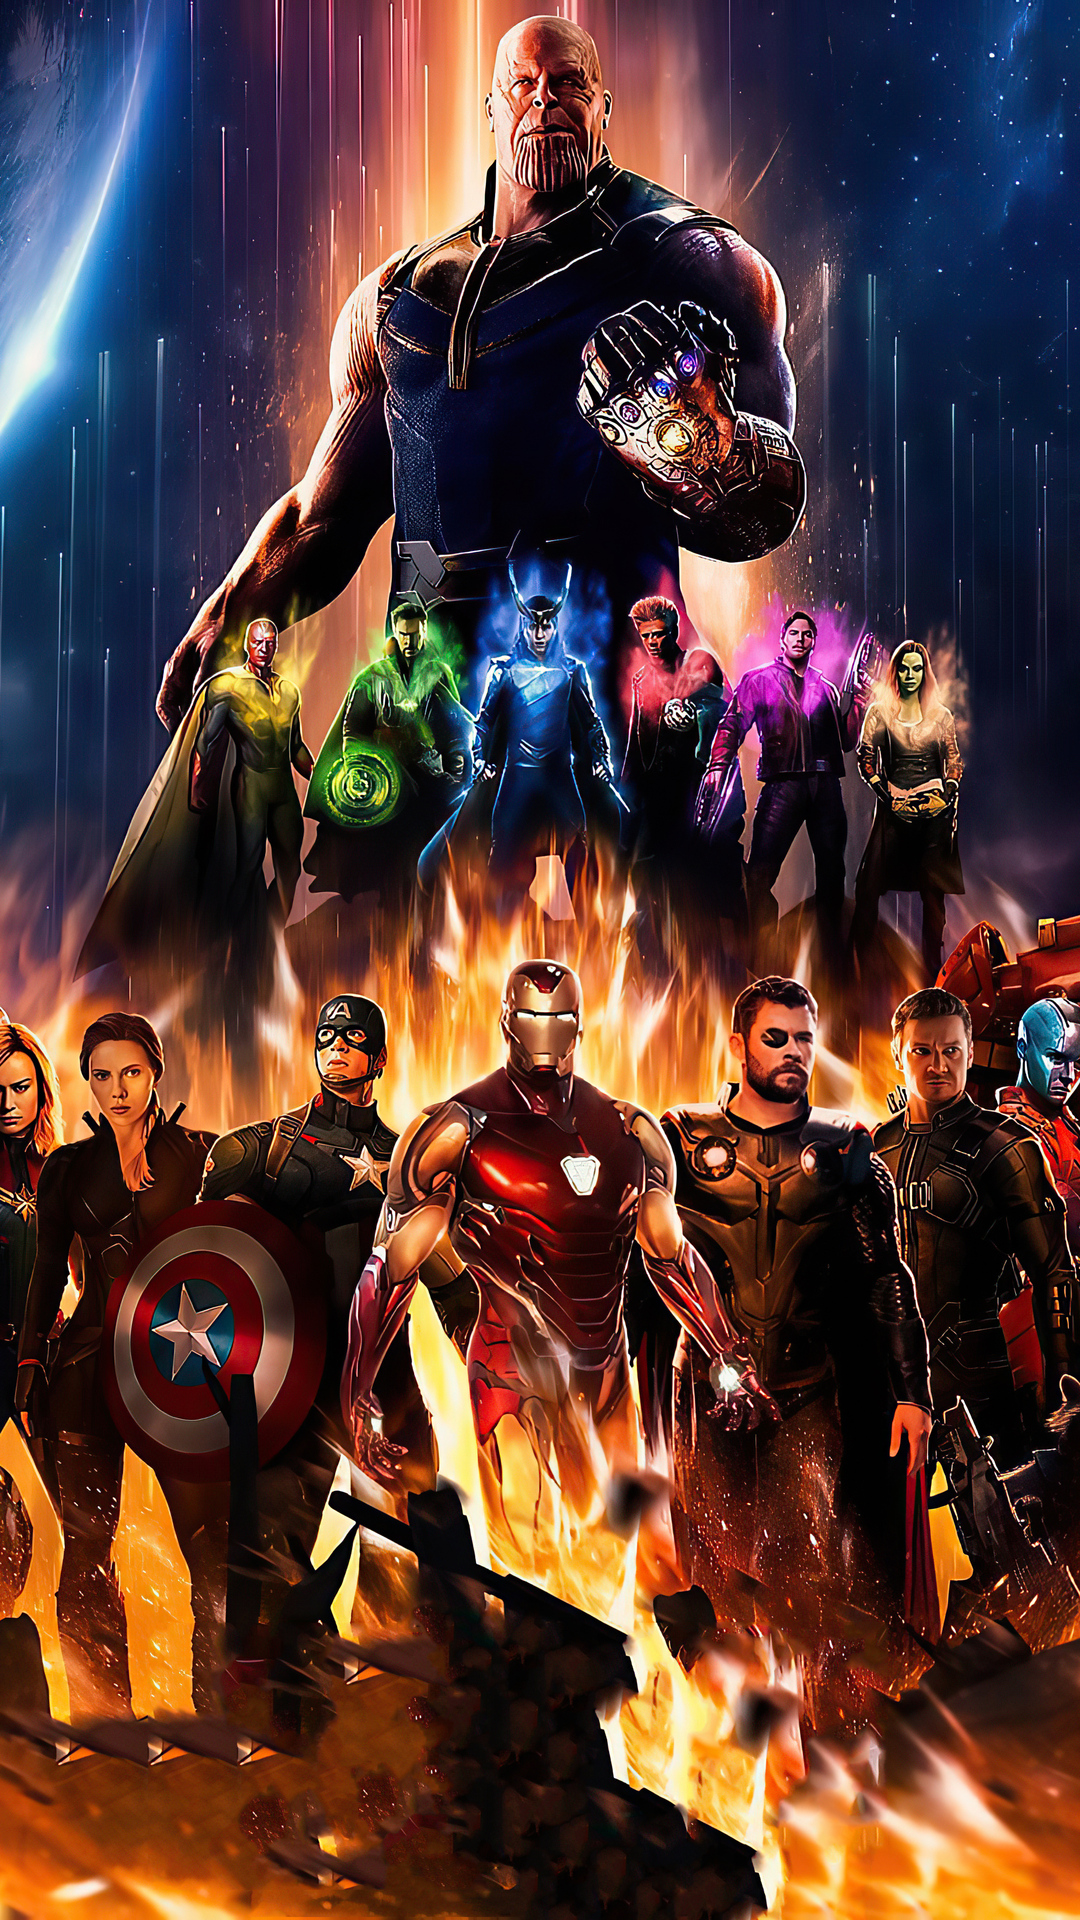 Avengers: Endgame download the new for apple